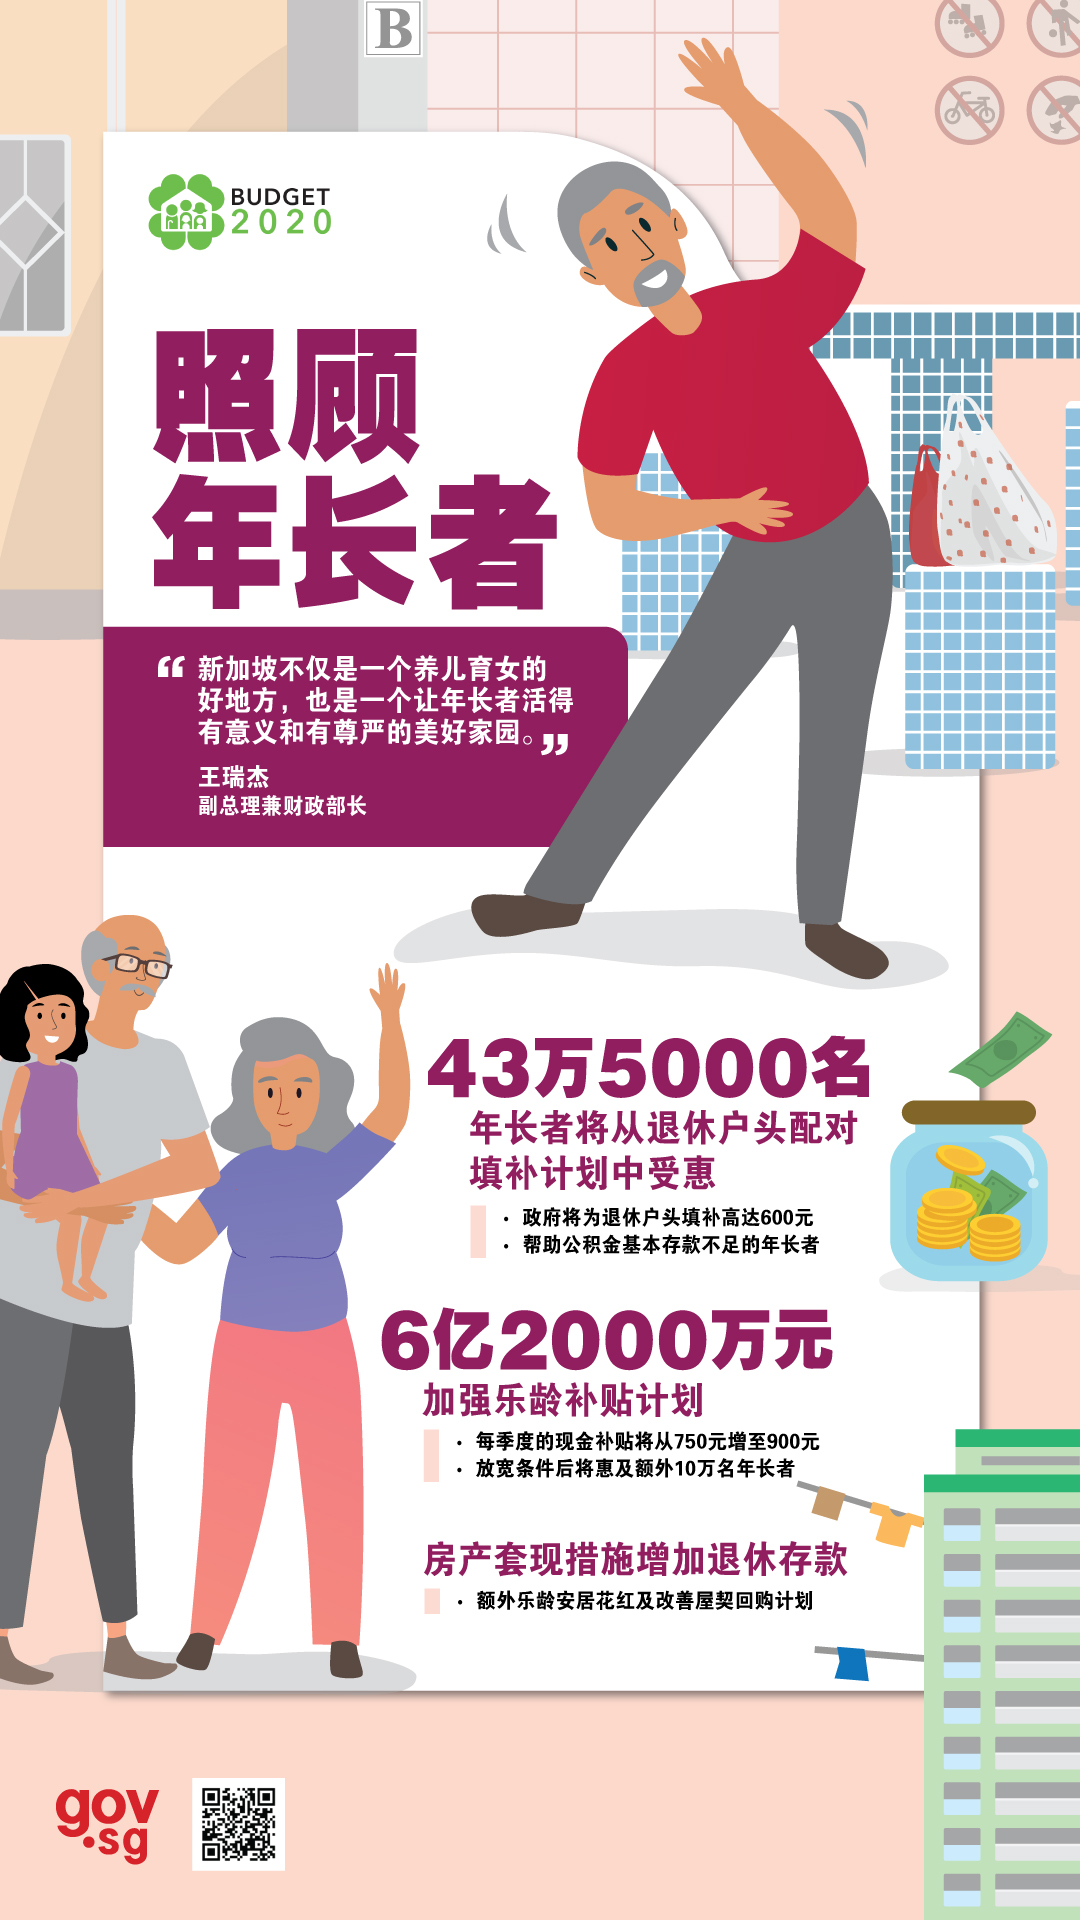 Chinese - Greater assurance for seniors in retirement